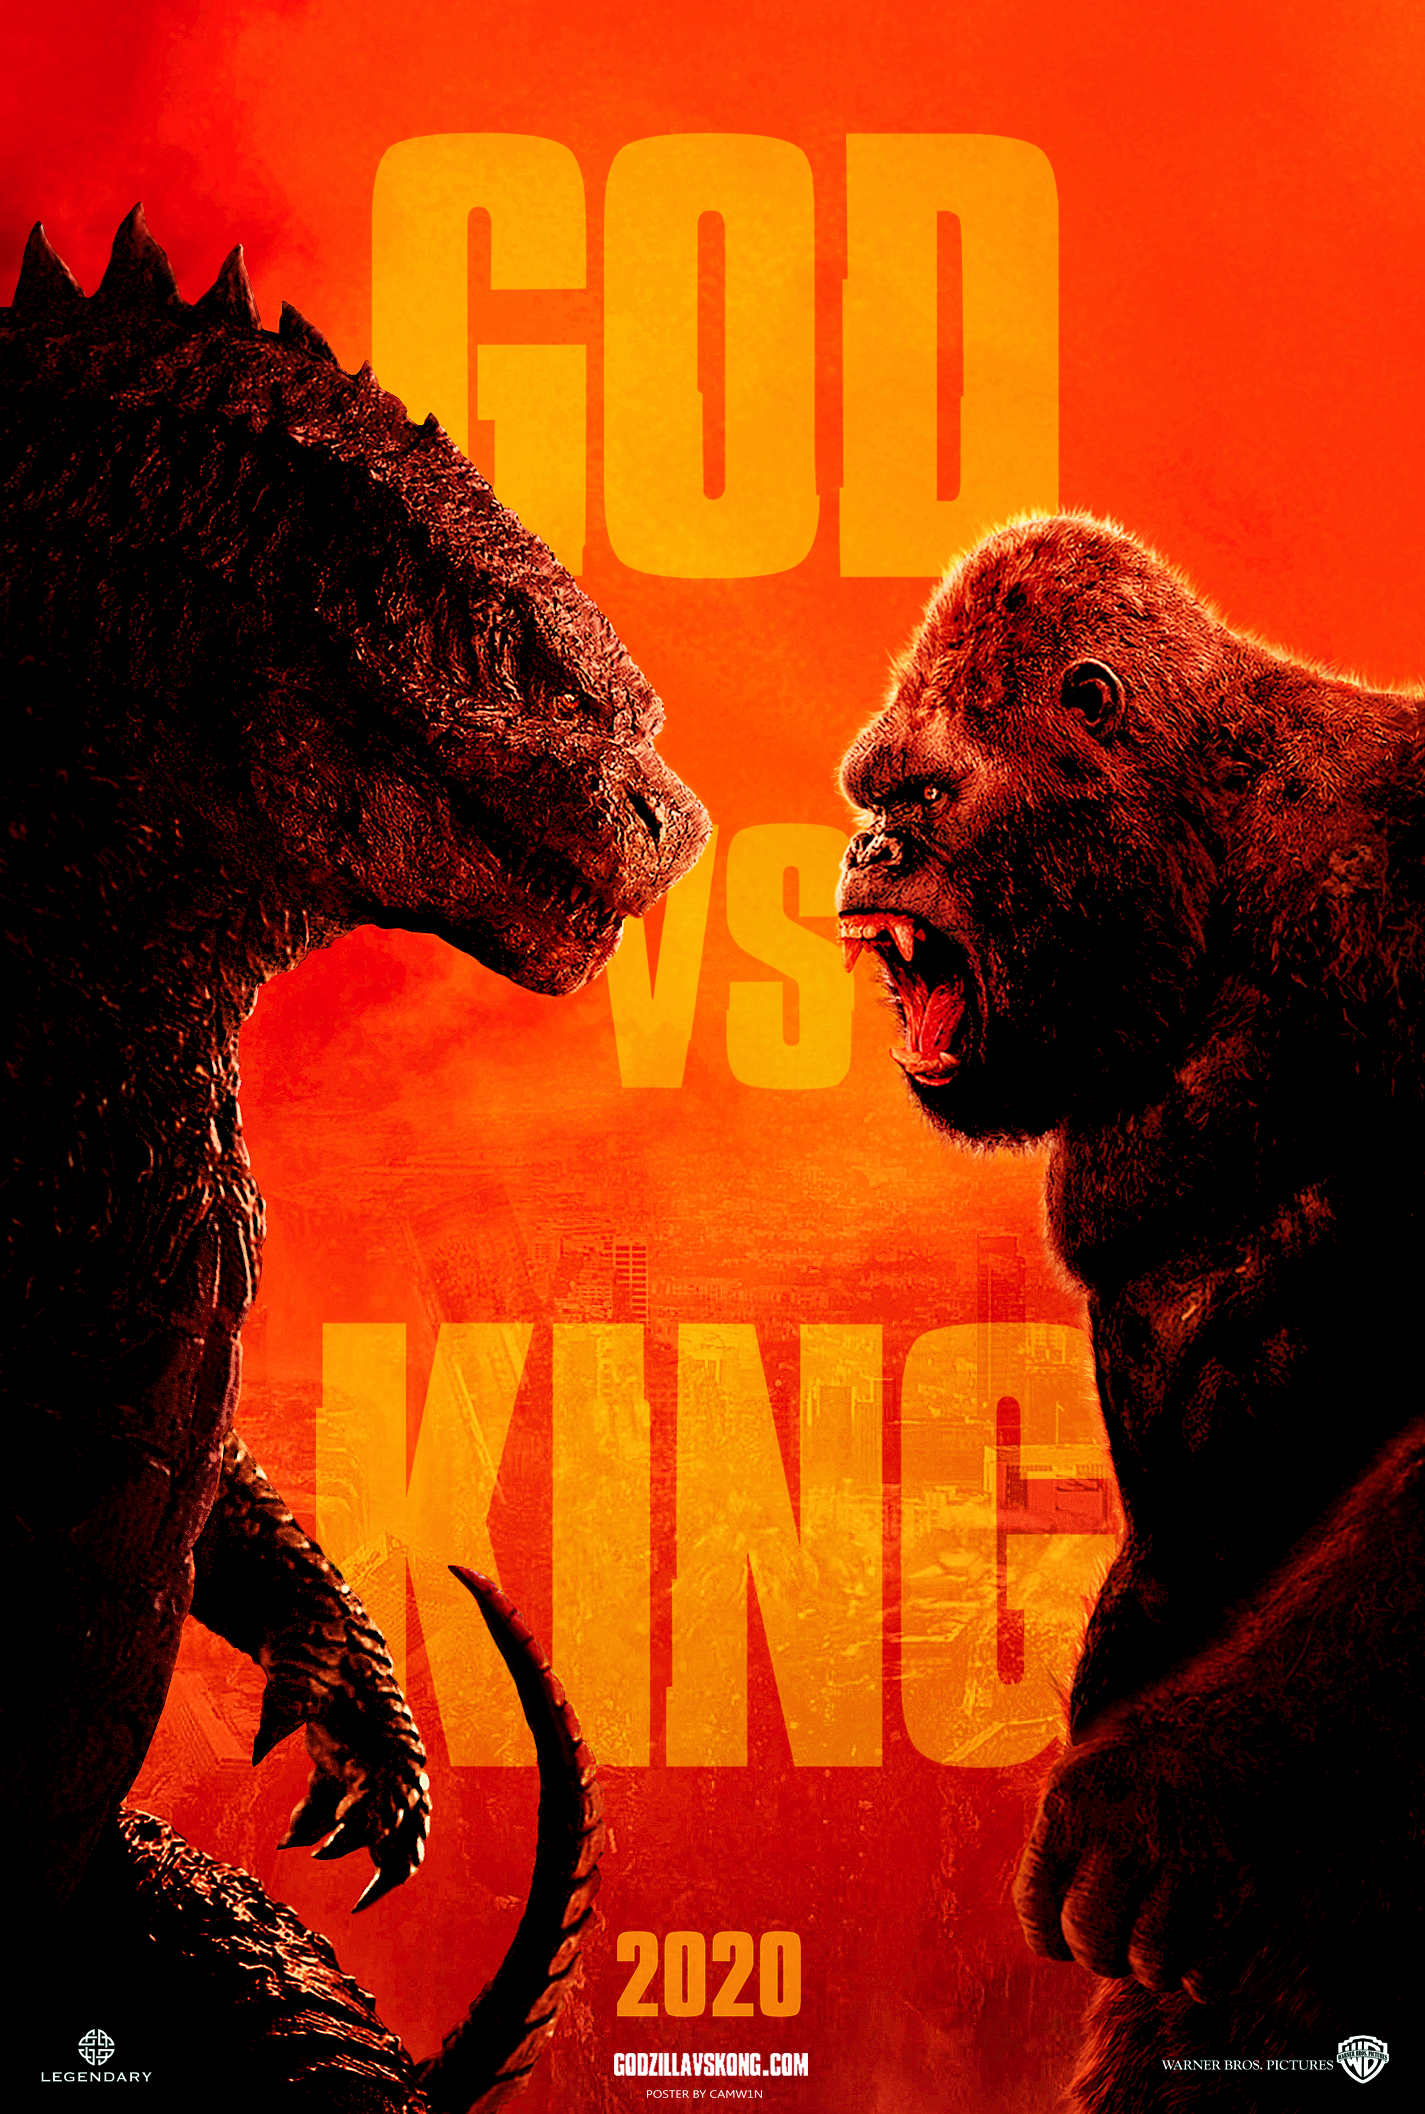 Godzilla Vs. Kong (2020) - Poster 5 by CAMW1N on DeviantArt